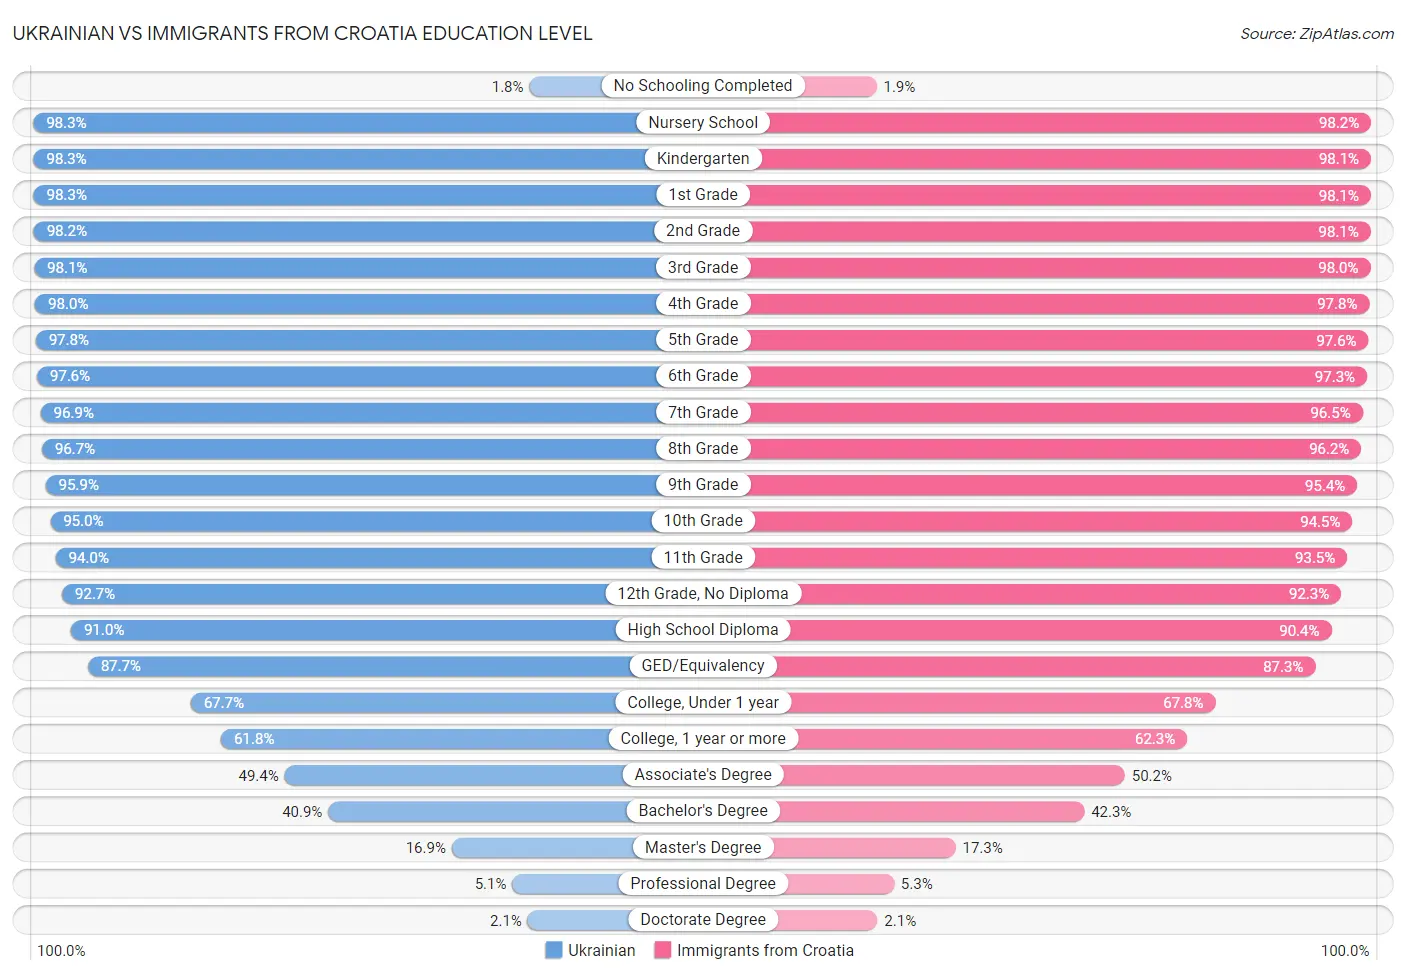 Ukrainian vs Immigrants from Croatia Education Level